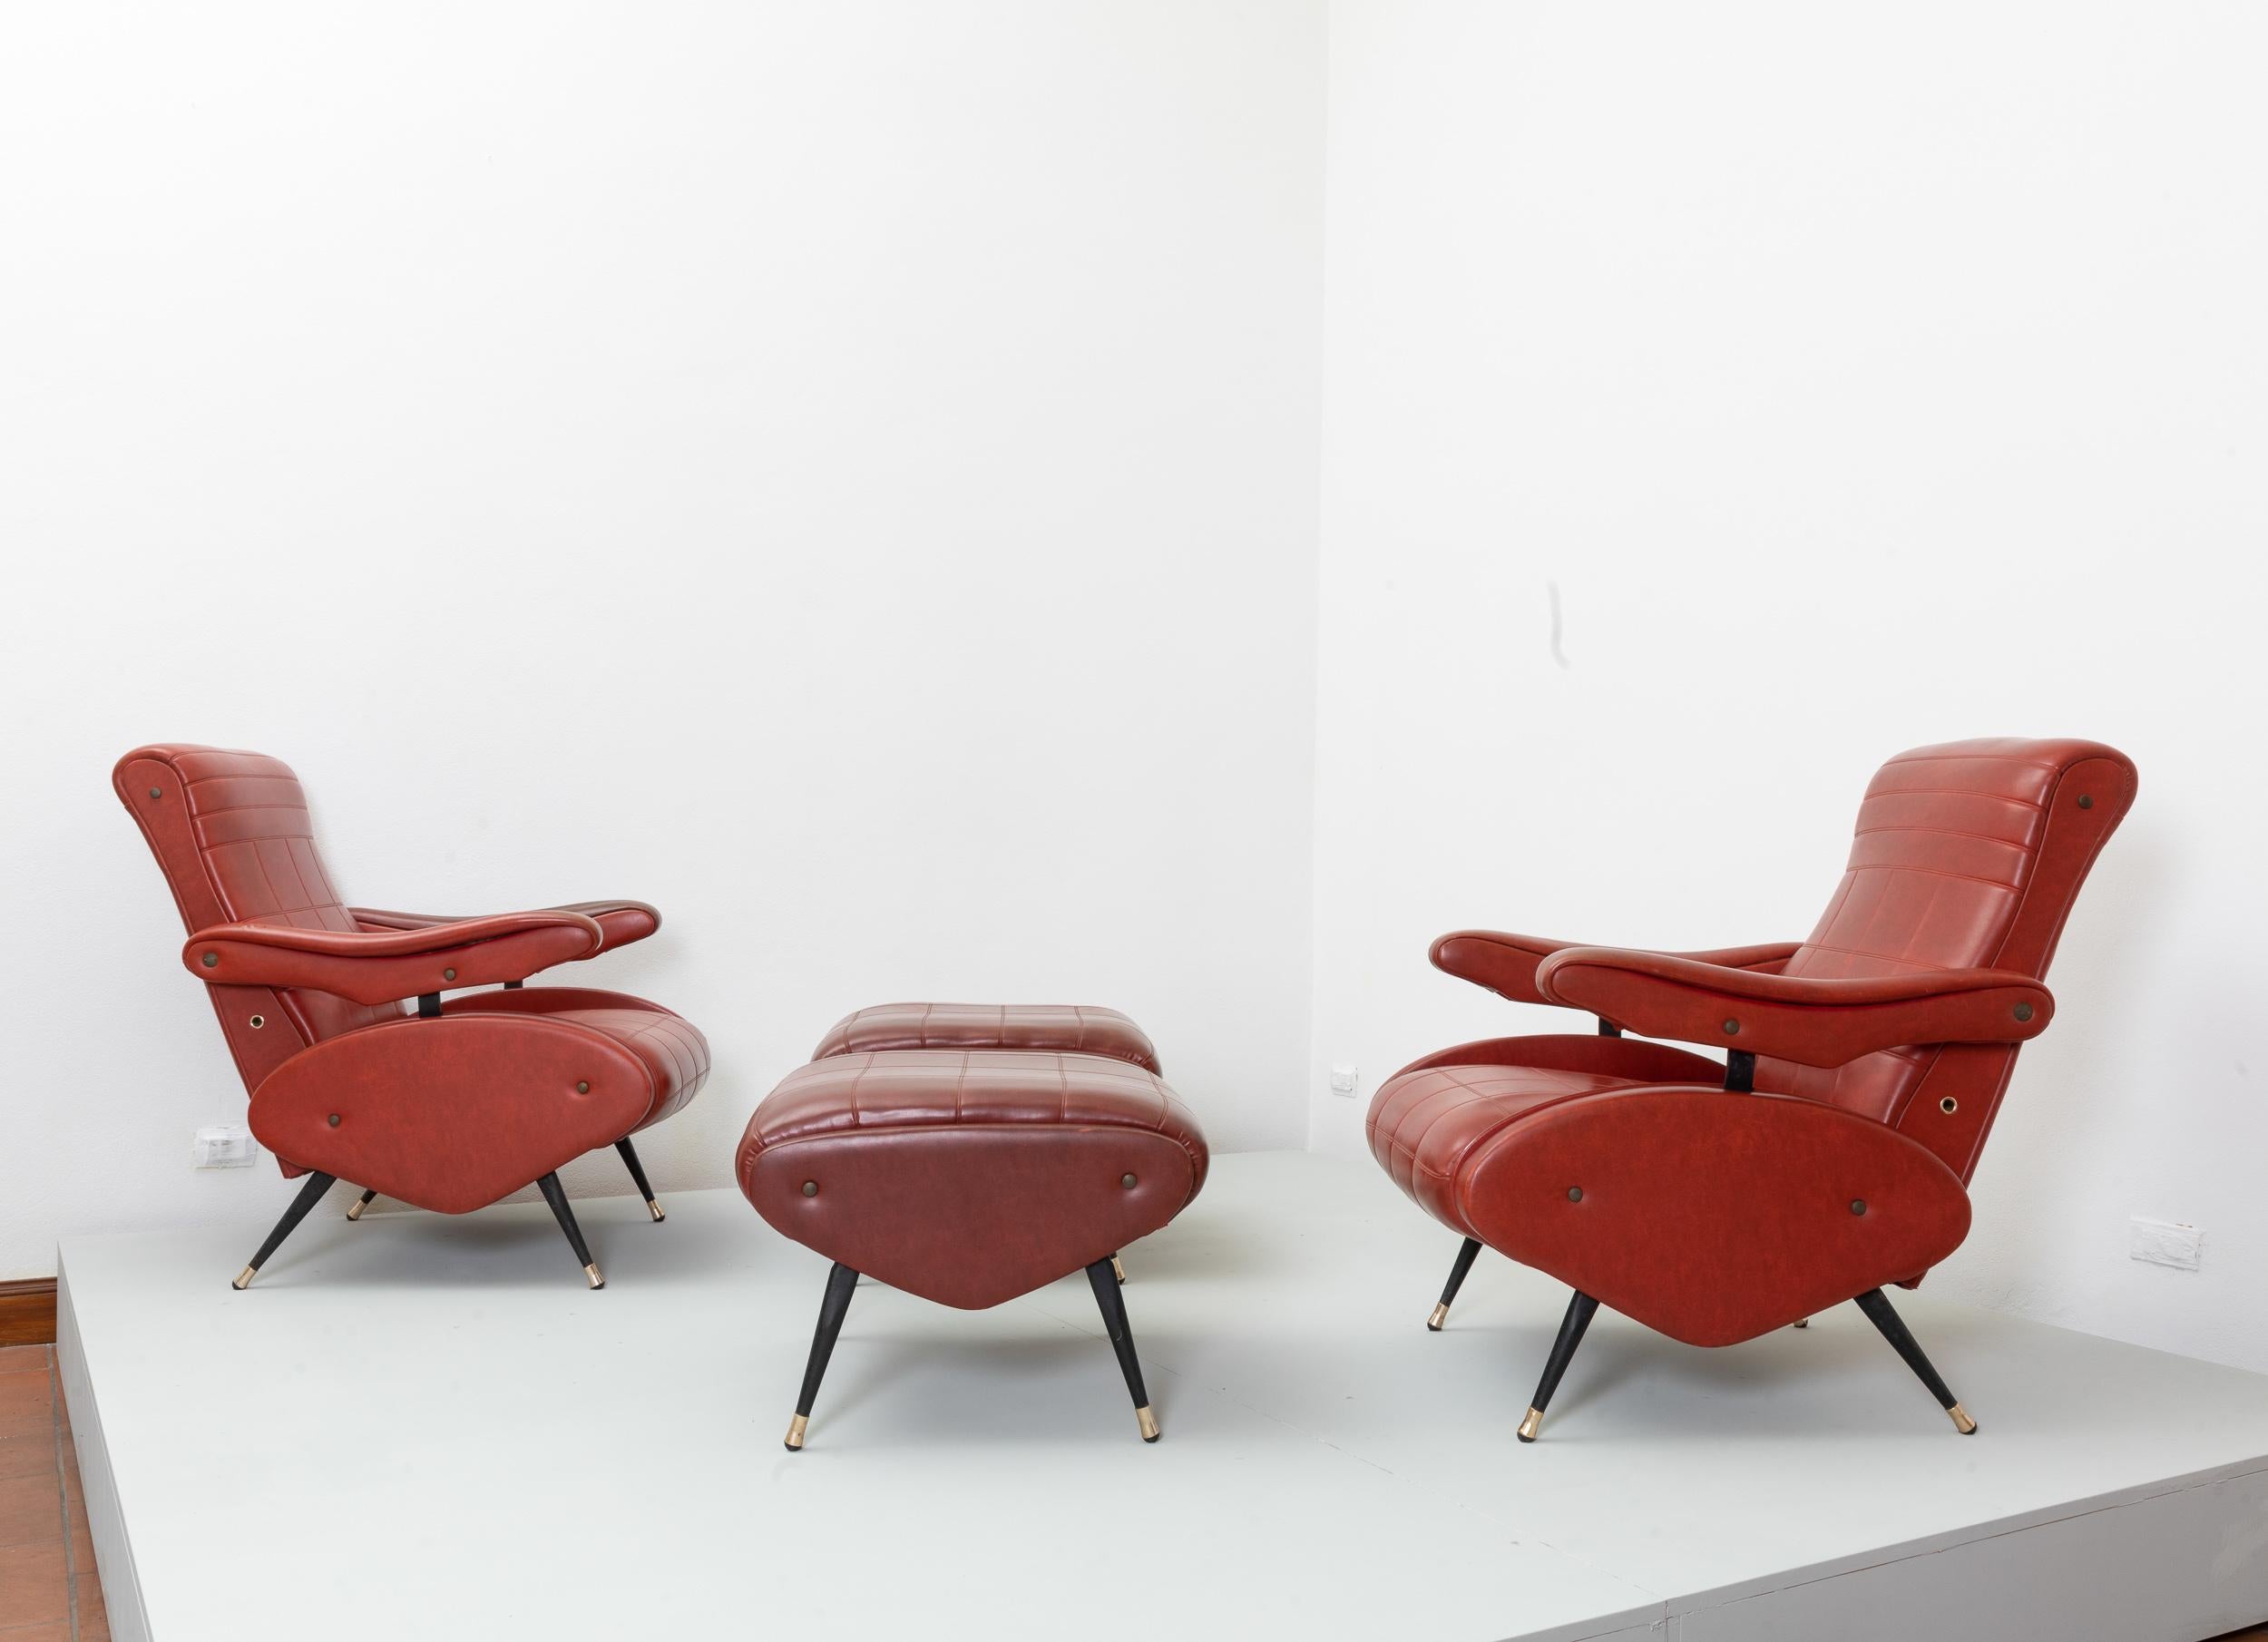 Nello Pini Prod. Novarredo c. 1950-1960 Two reclining armchairs and two pouffs 3